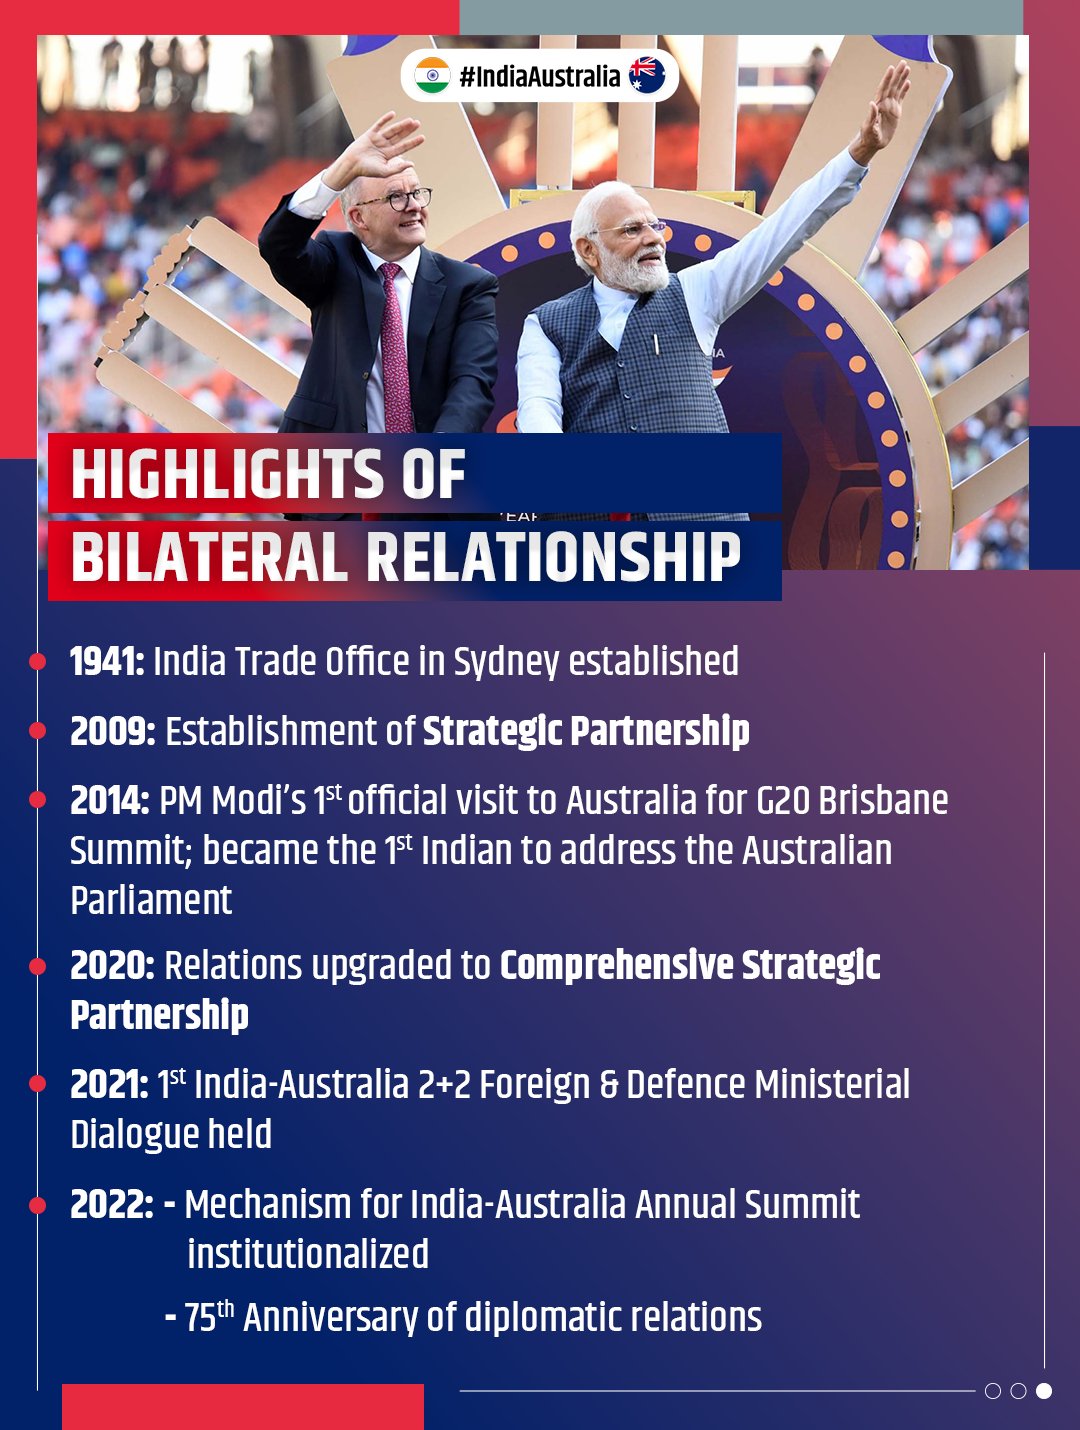 India-Australia relations